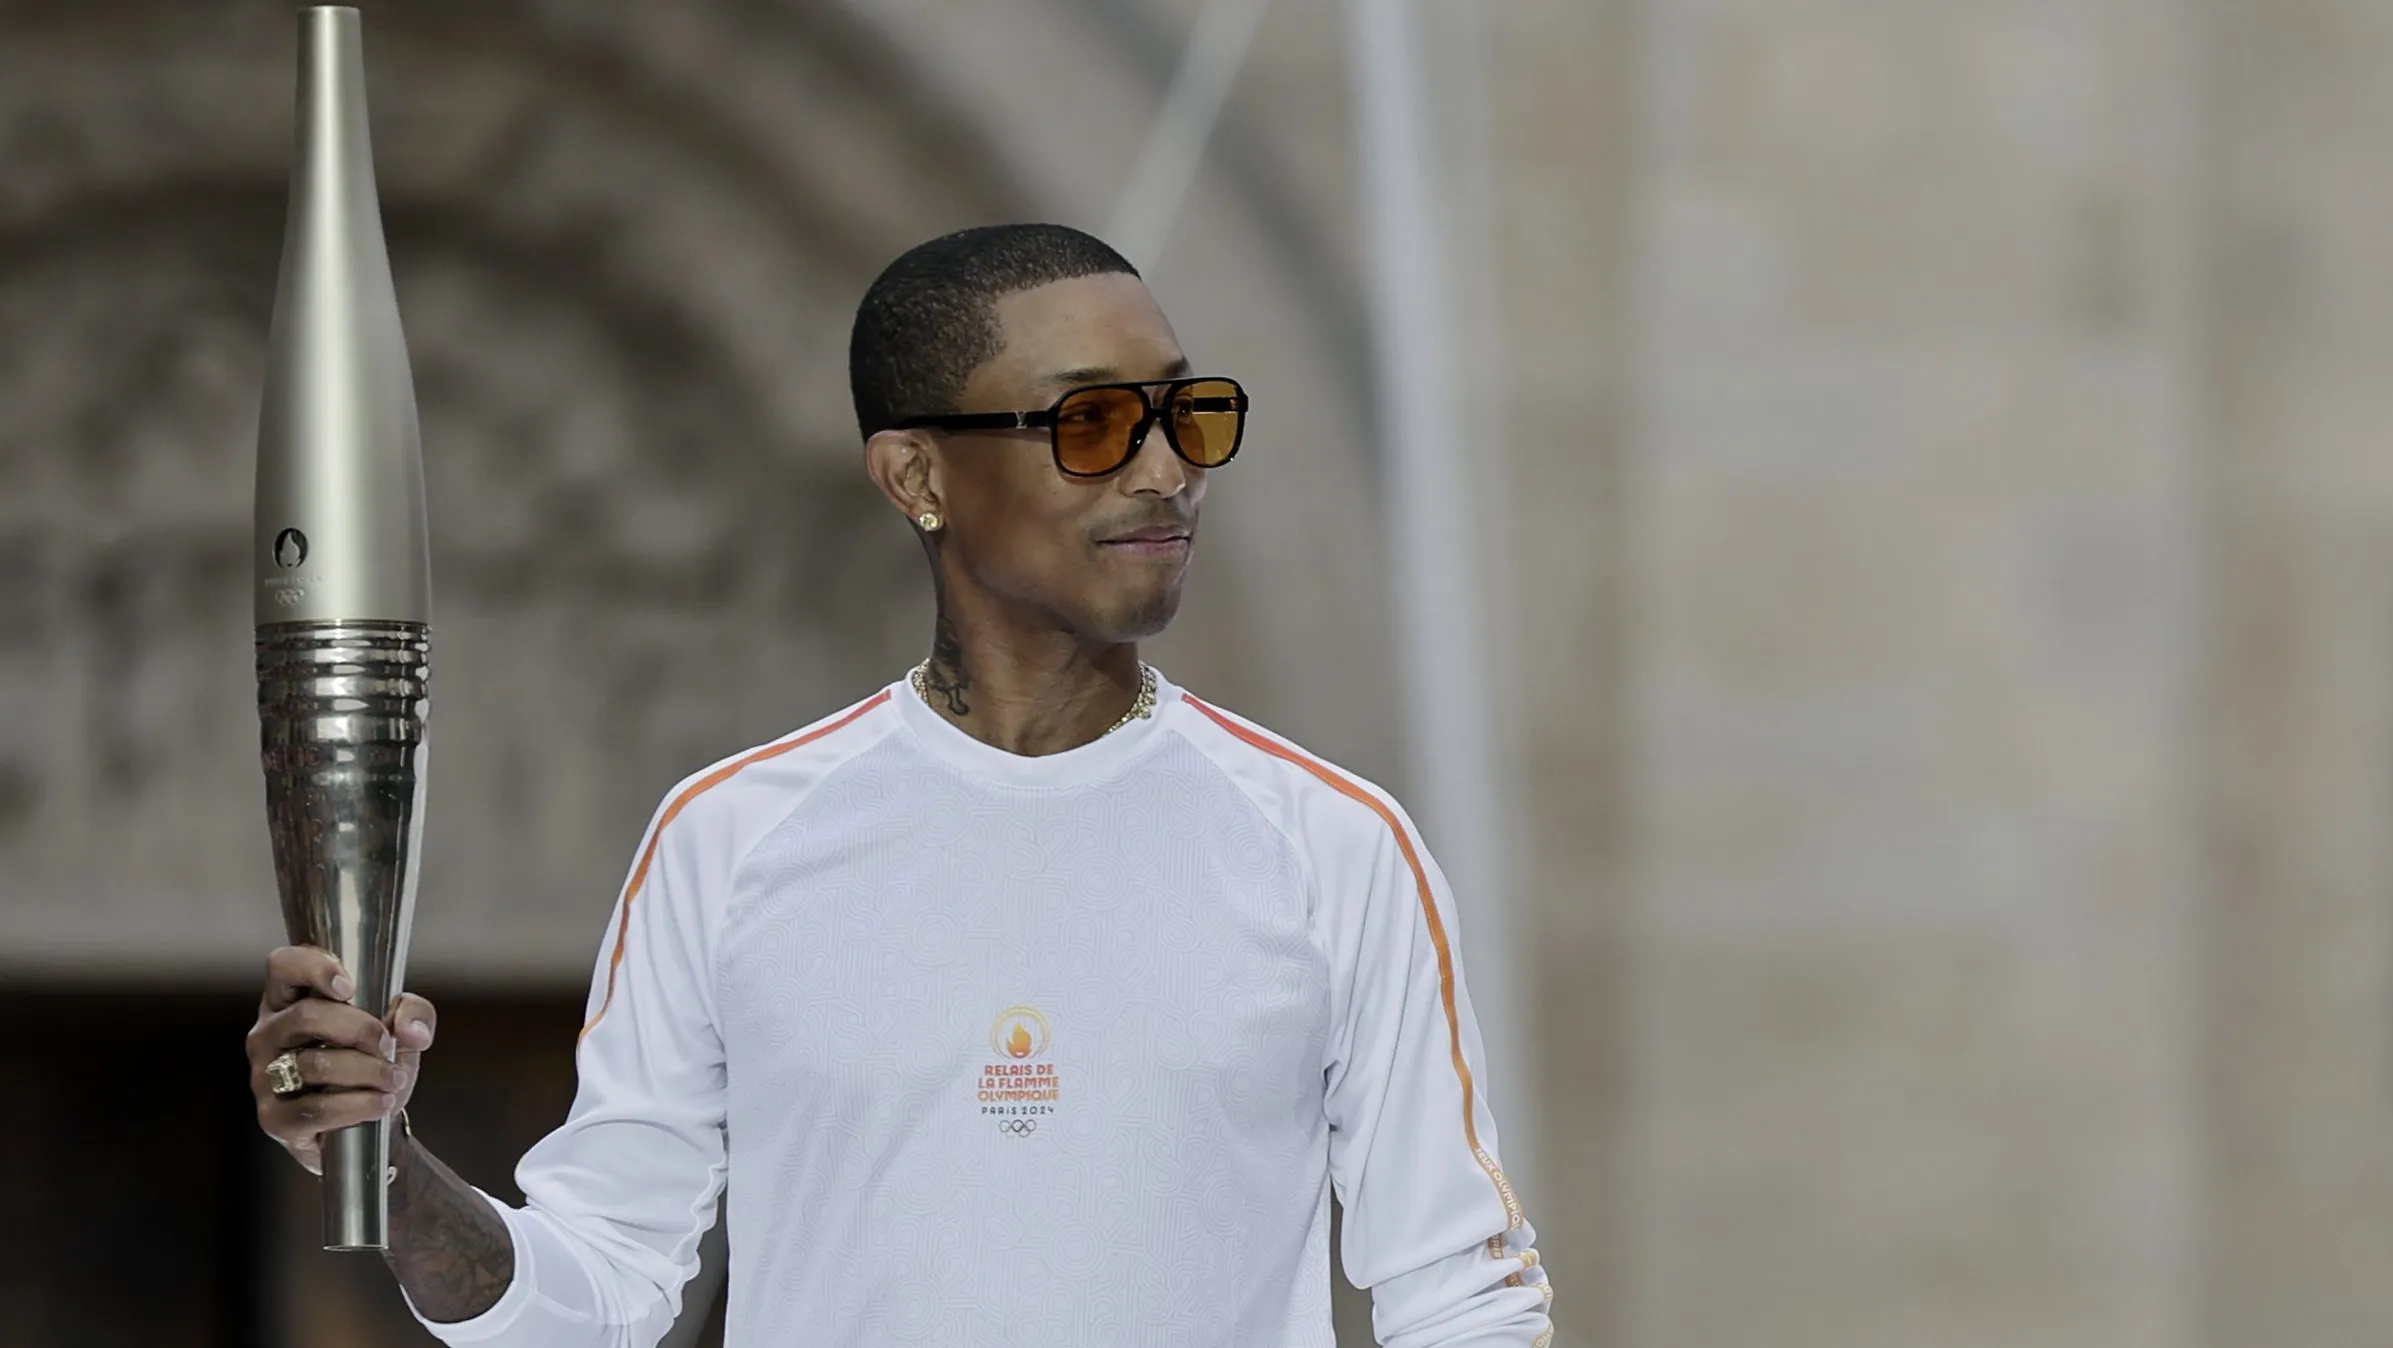 Black celebs add star power to the 2024 Paris Olympics